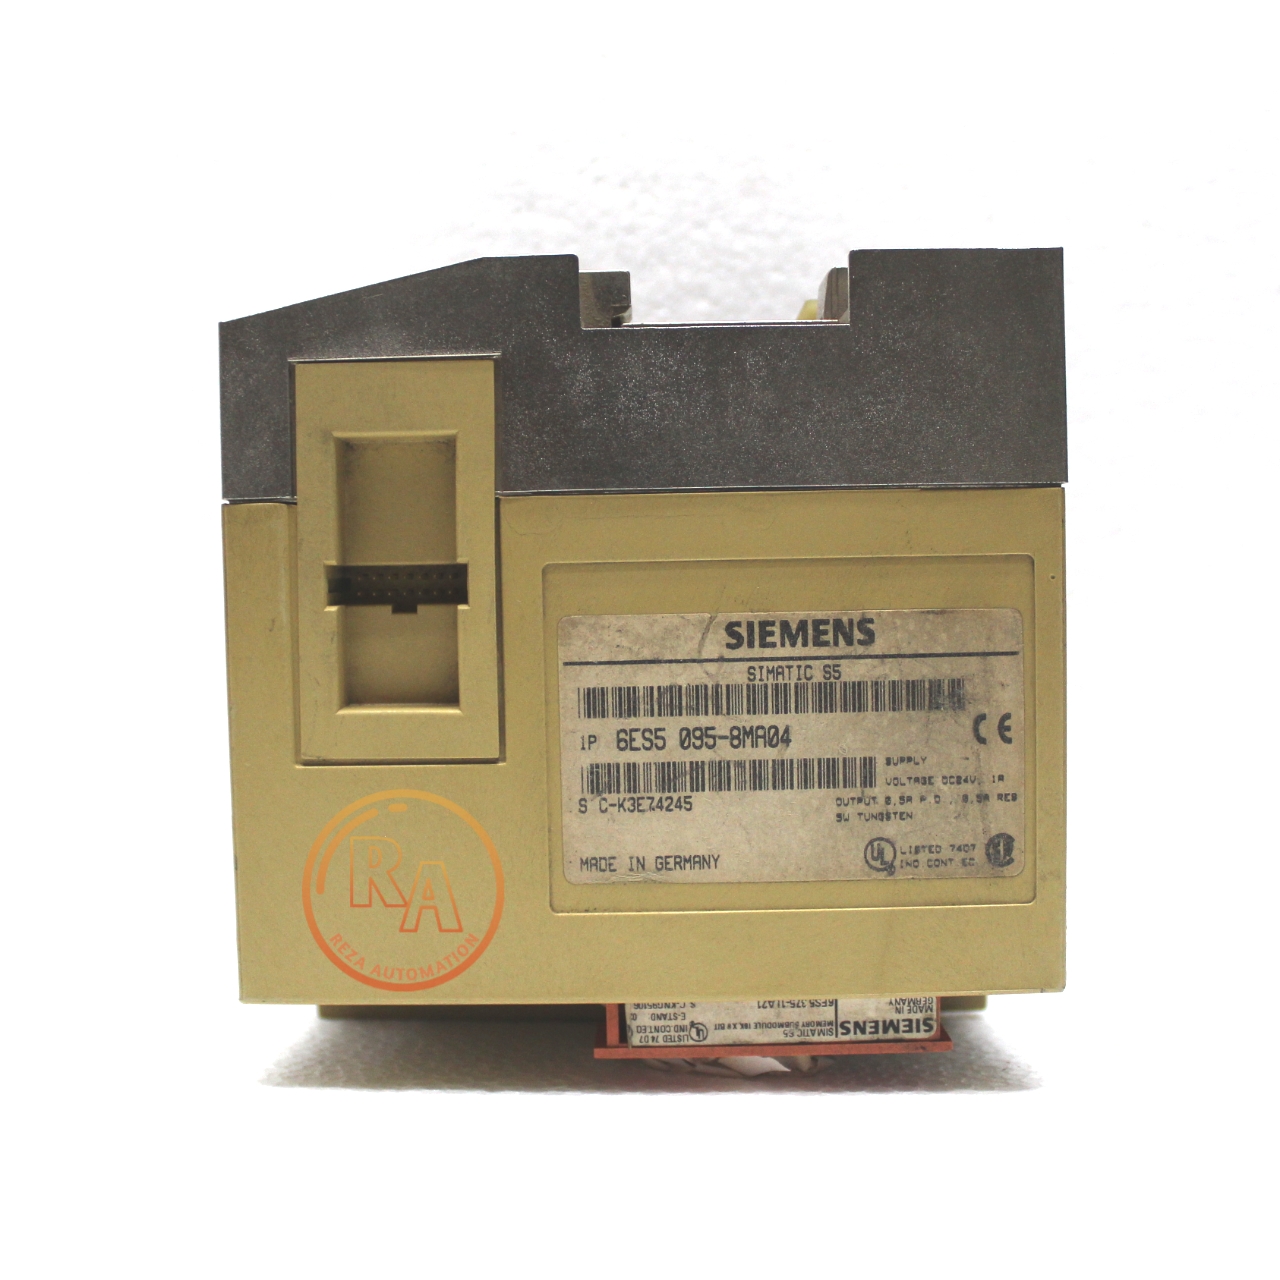 SIEMENS 6ES5 095-8MA04 SIMATIC S5-95U Compact Controller, 32 I/O